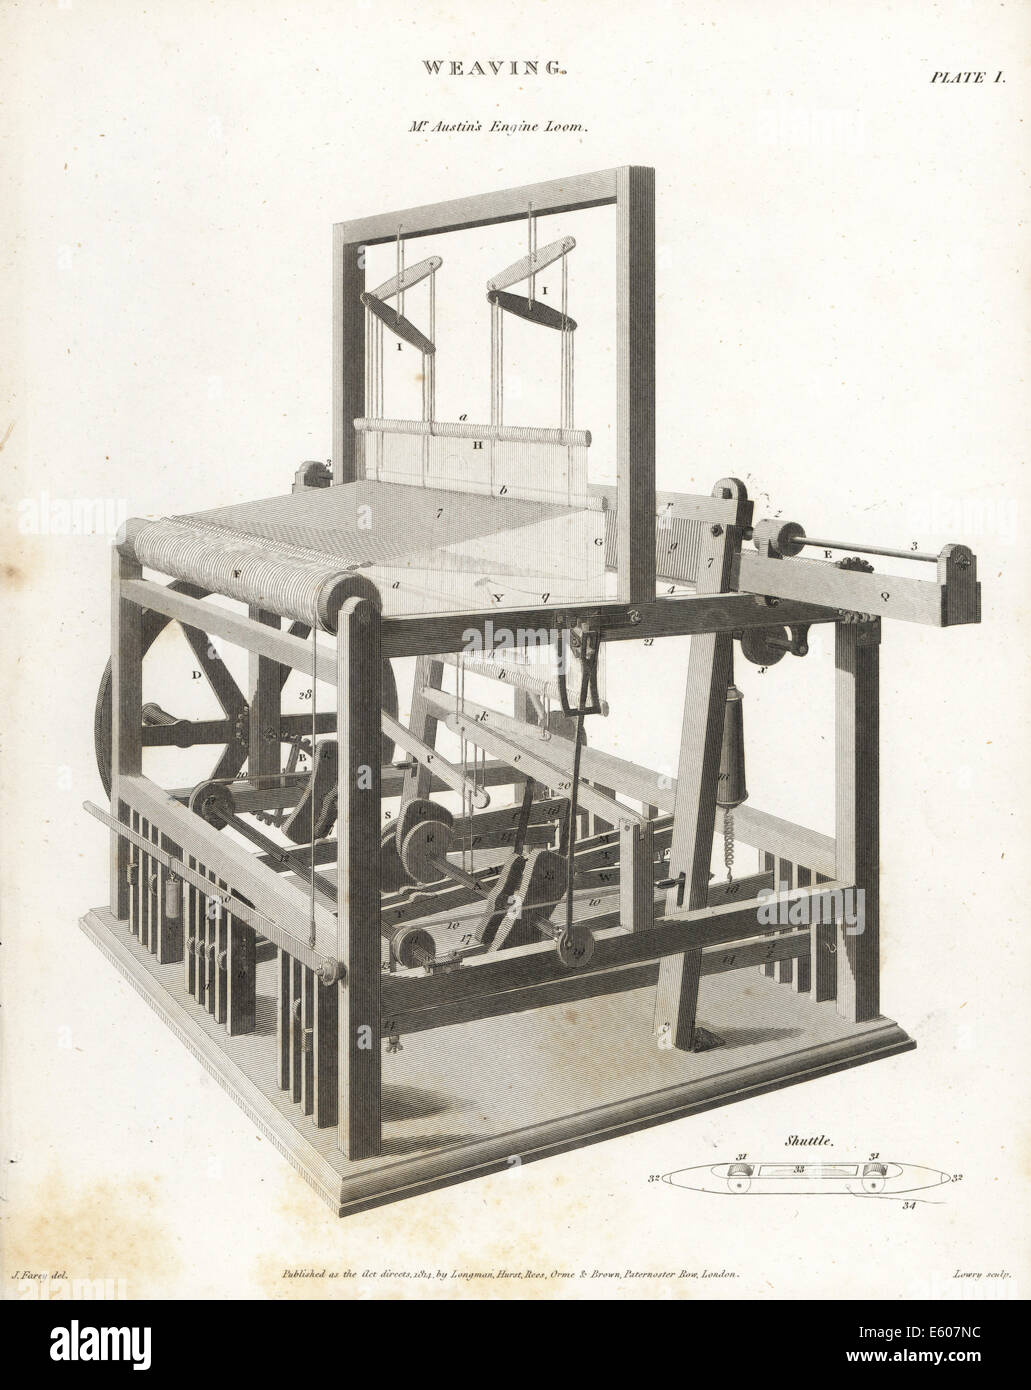 John Austin's steam-powered engine loom and shuttle, 18th century. Stock Photo